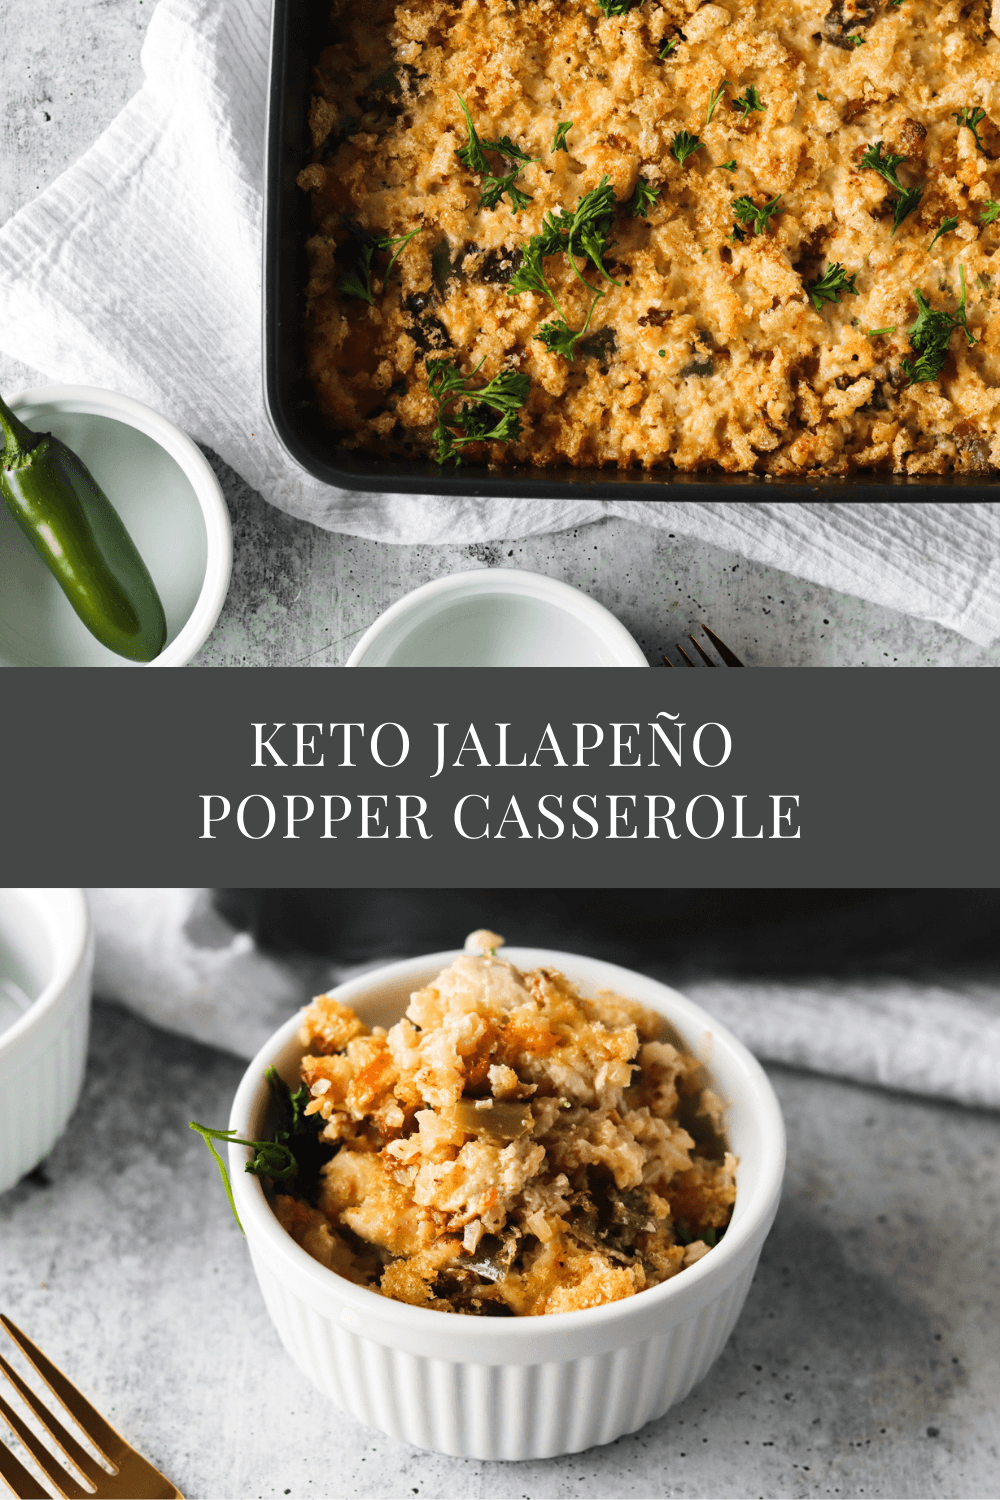 Keto Jalapeño Popper Casserole recipe